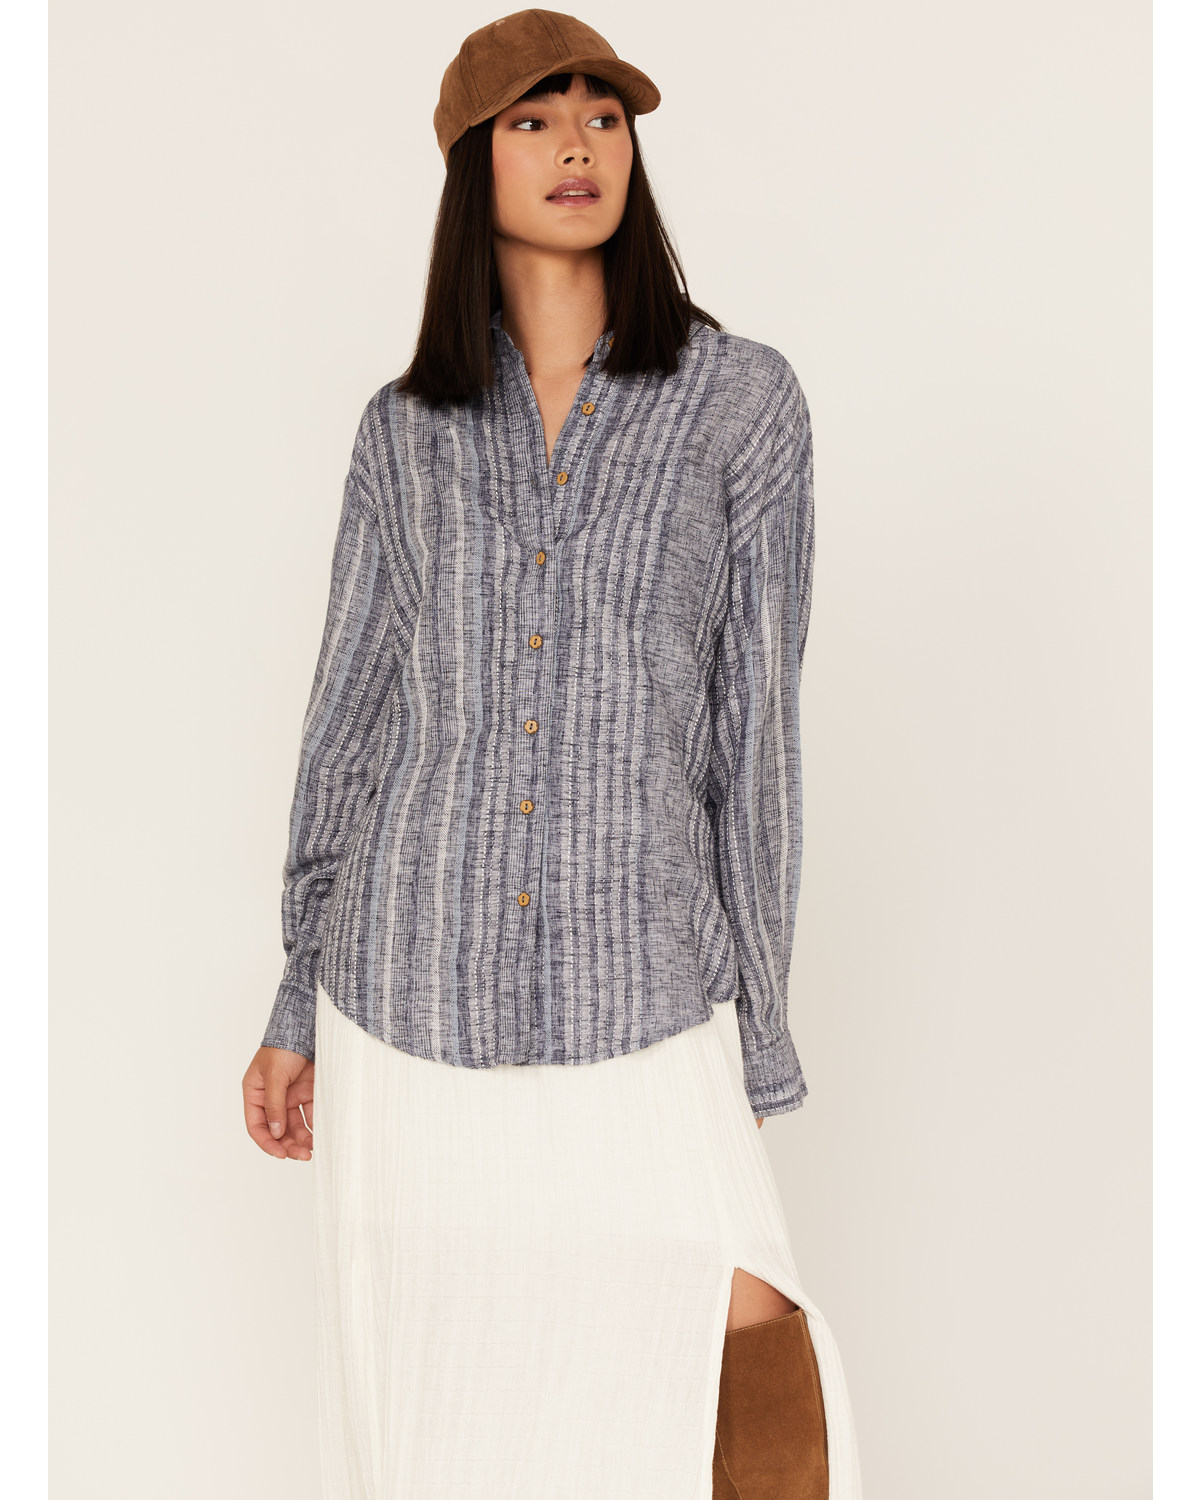 Cleo + Wolf Women's Novelty Stripe Button-Down Long Sleeve Shirt